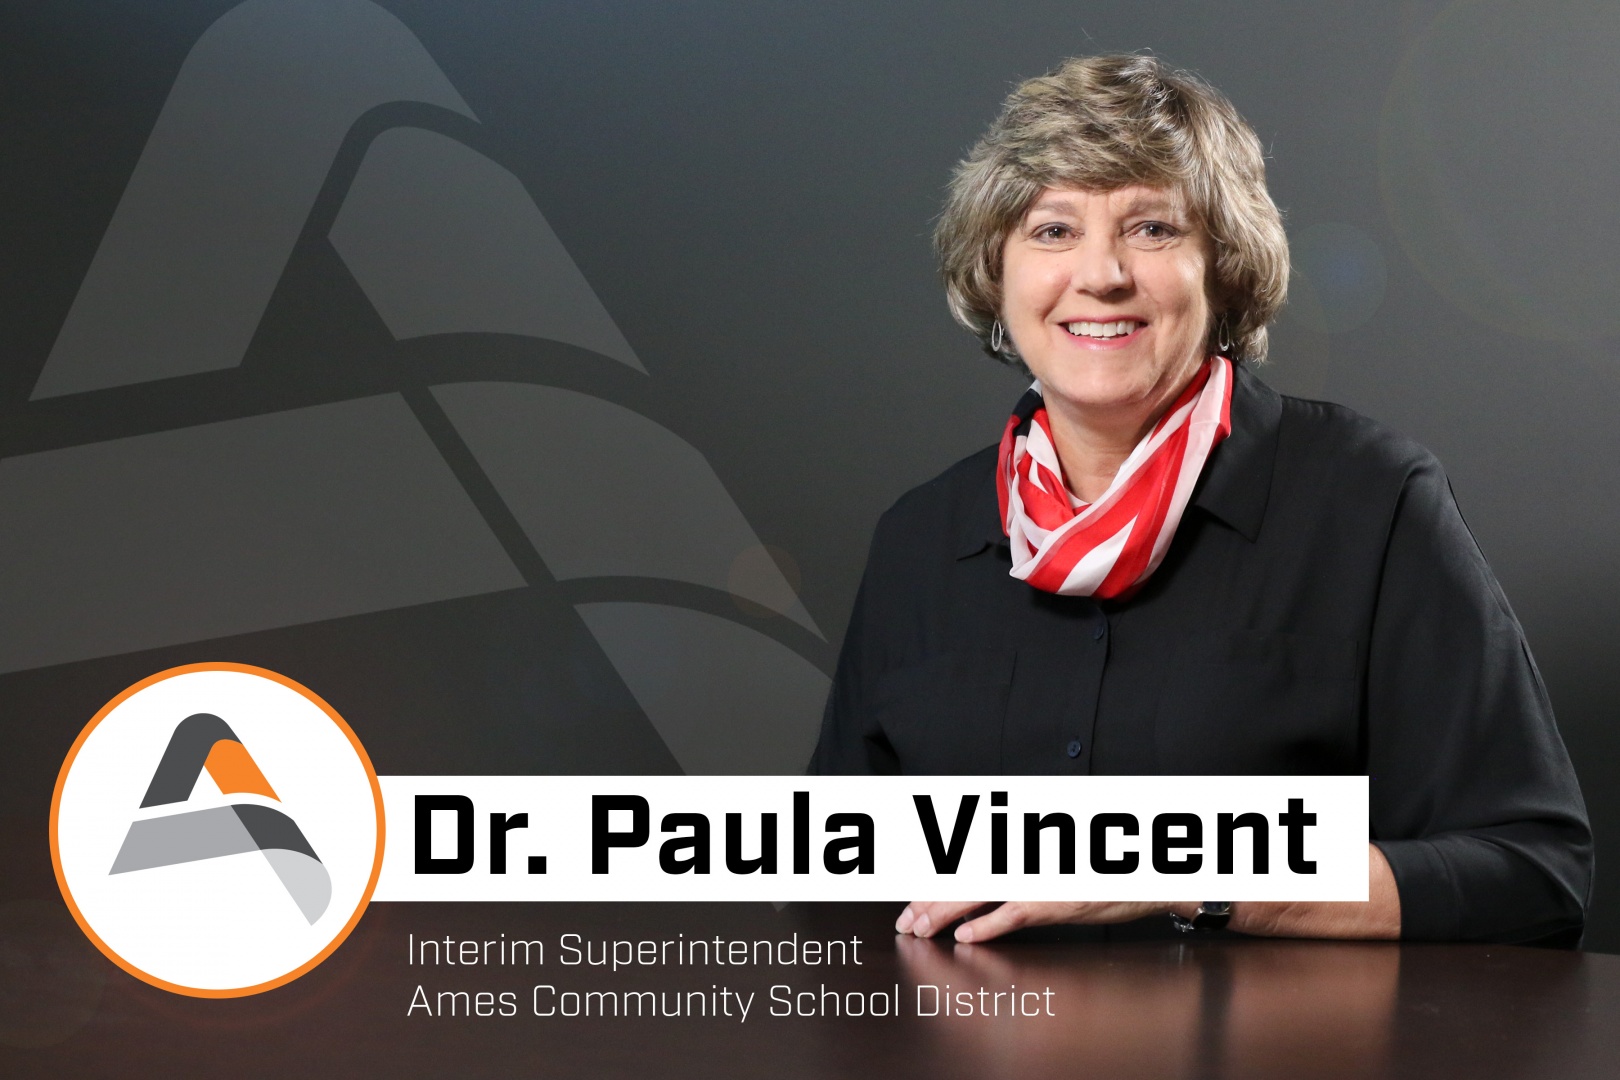 Dr. Paula Vincent named Interim Superintendent of Ames Community School District